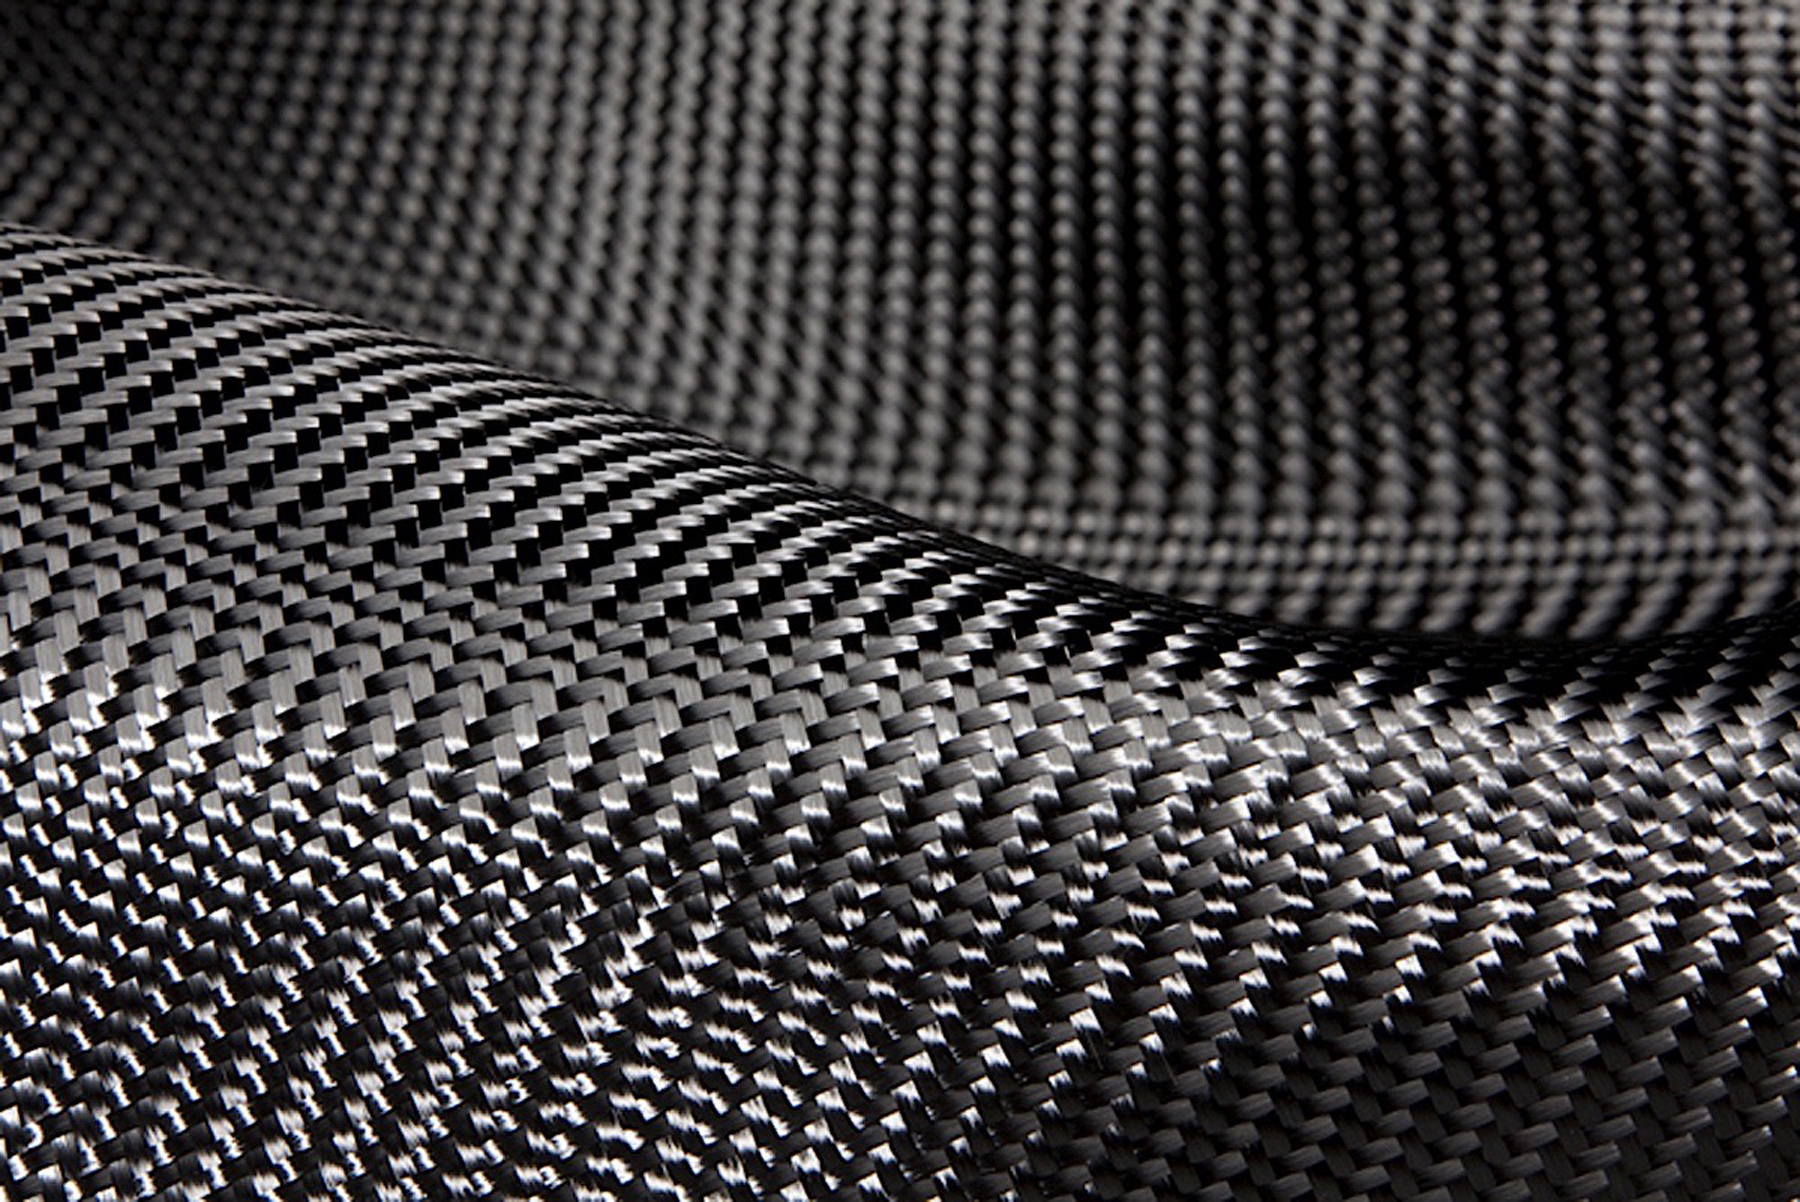 Carbon Fiber - Sit Back, It's Time For A Lesson in Composites